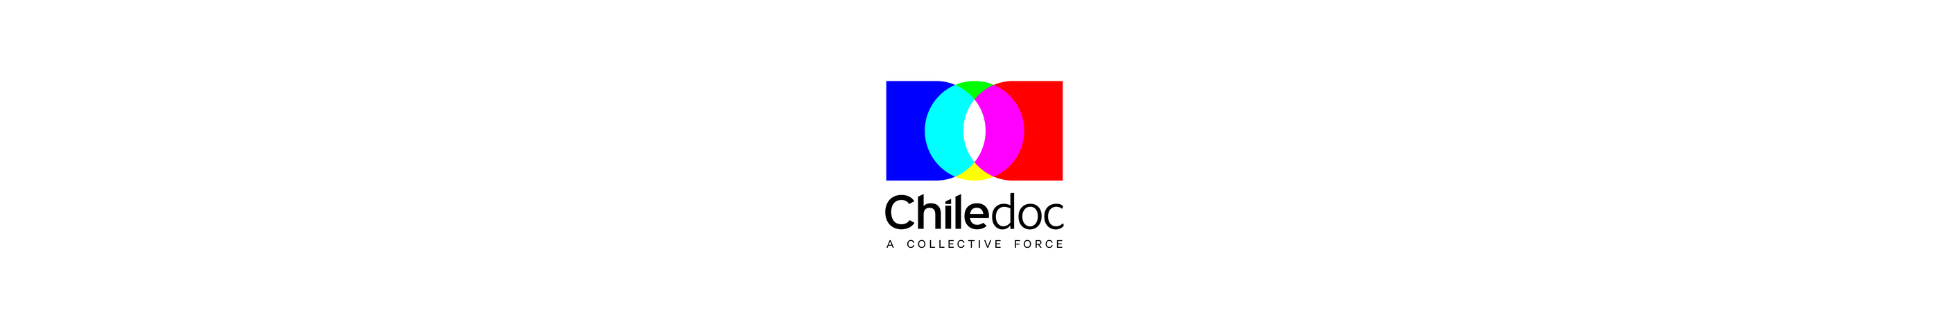 Chiledoc logo